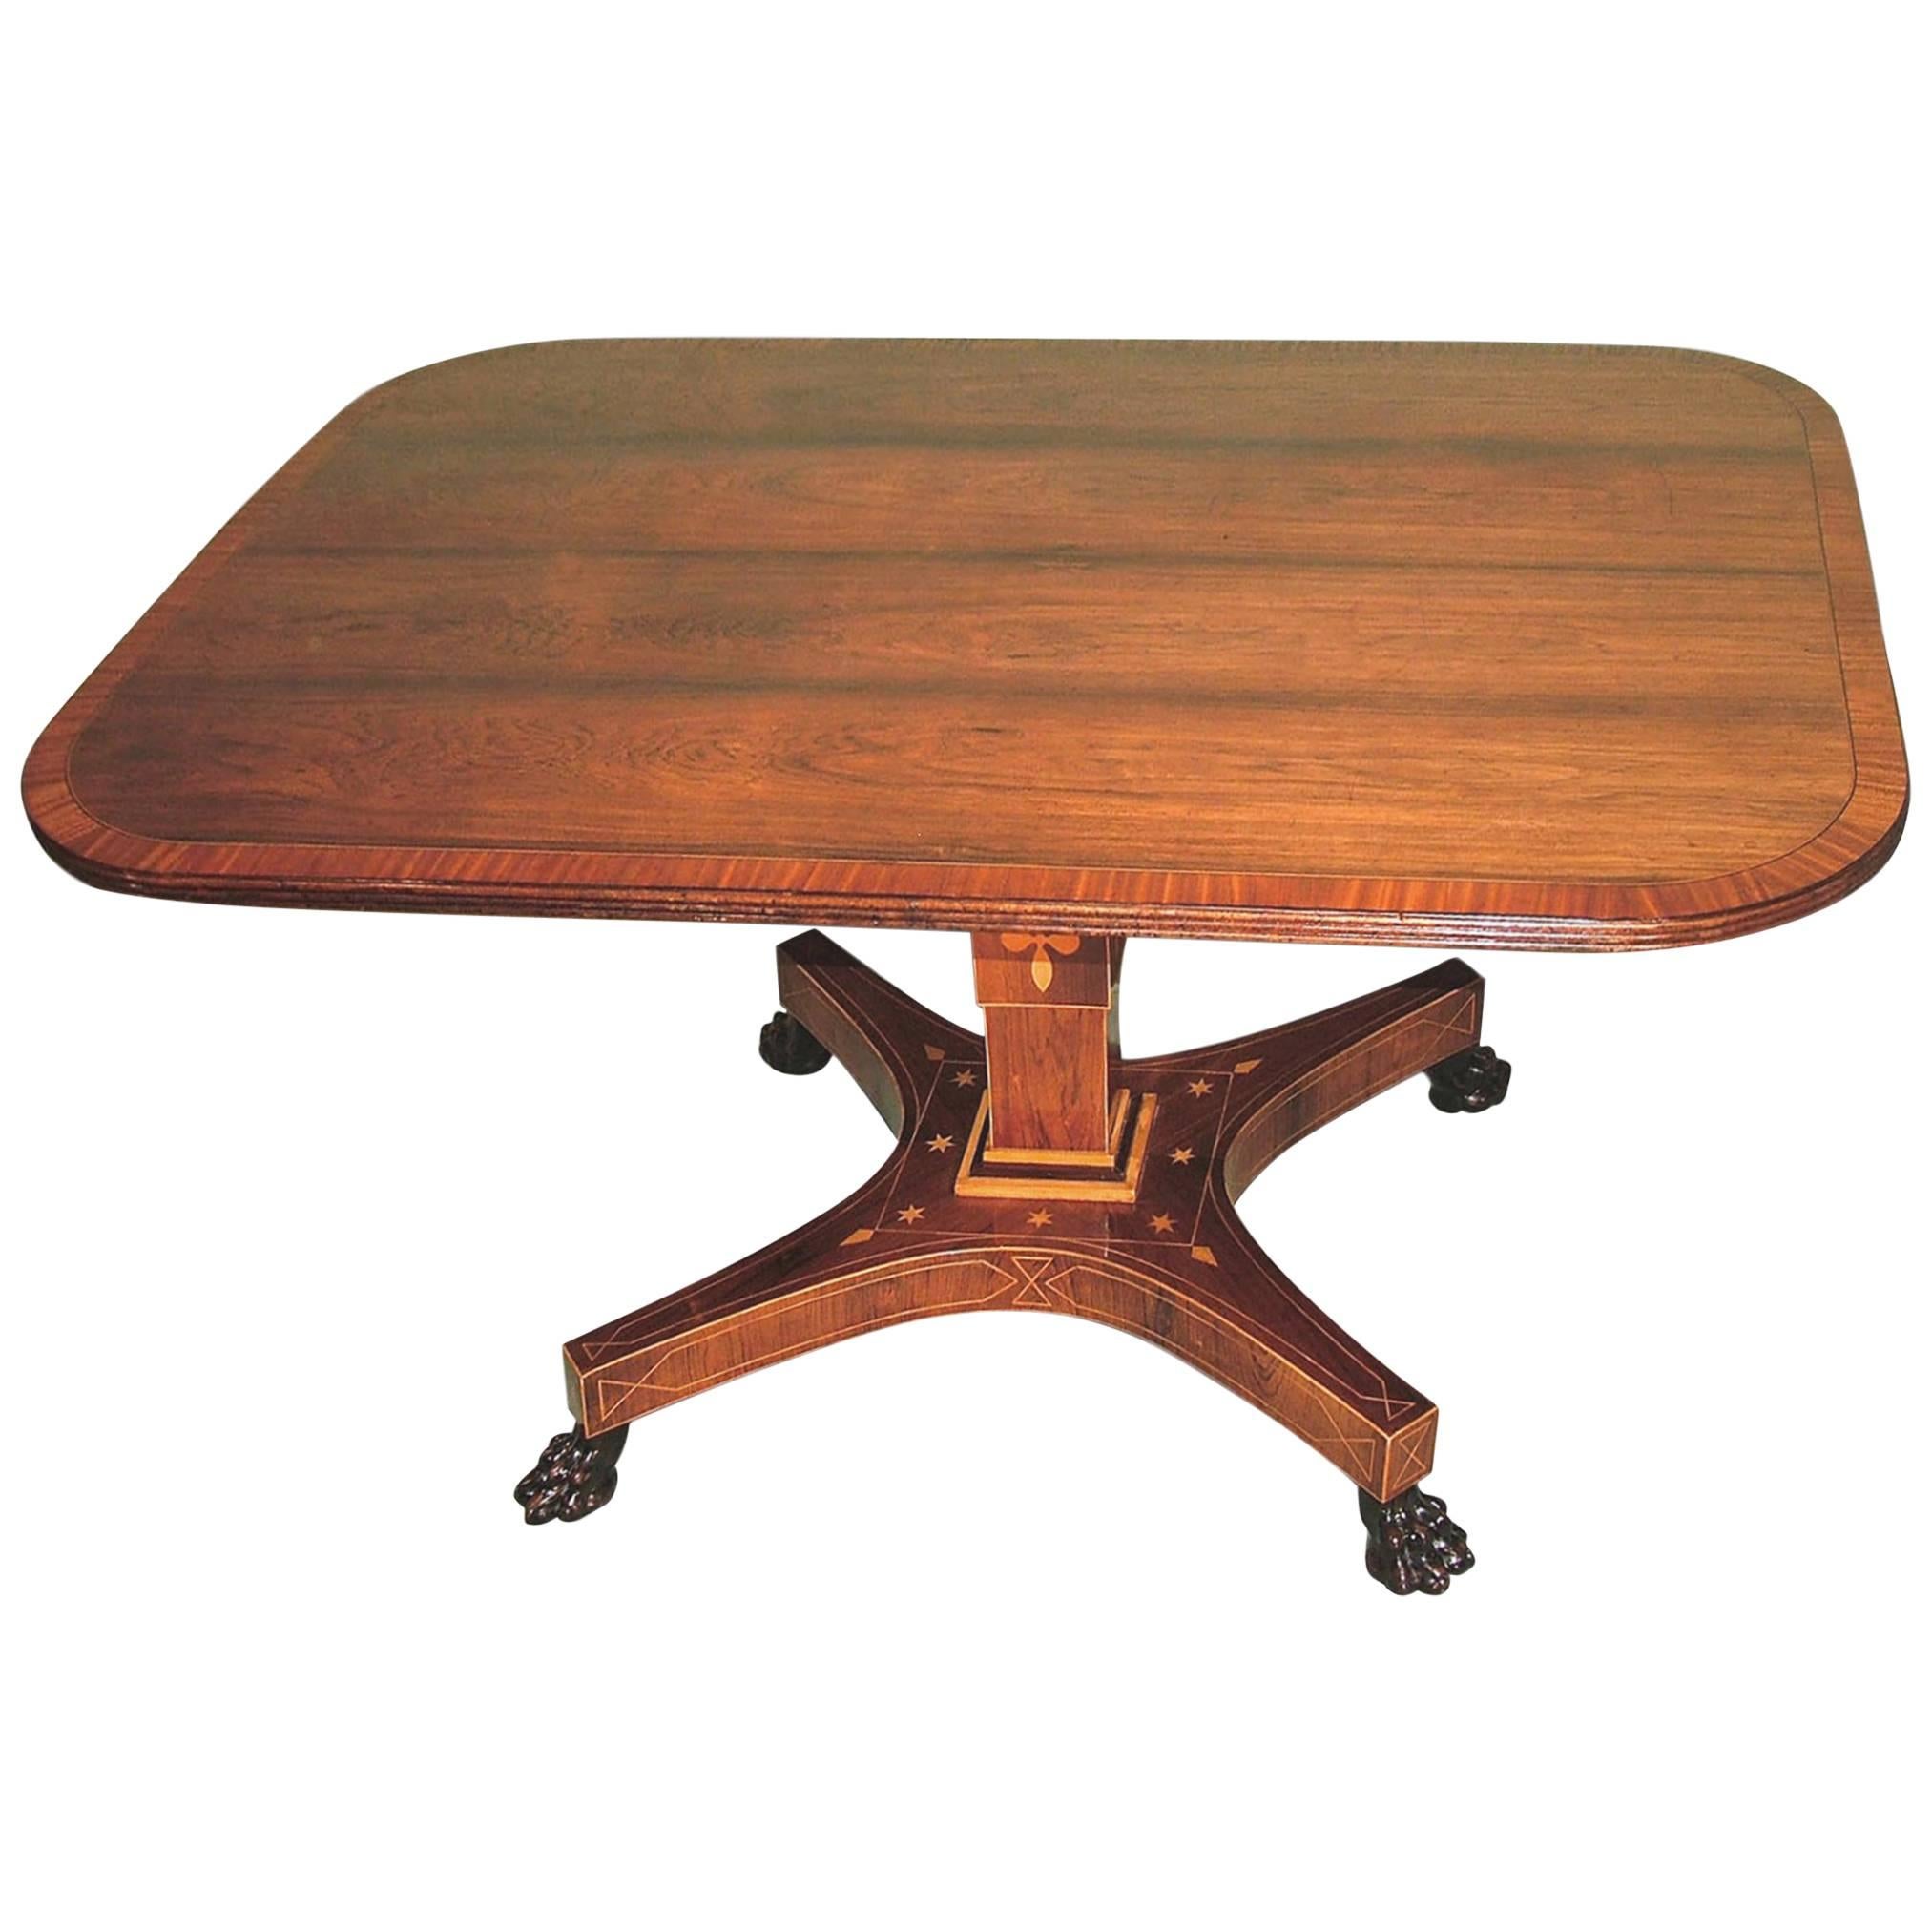 Regency period rosewood breakfast table with rectangular top